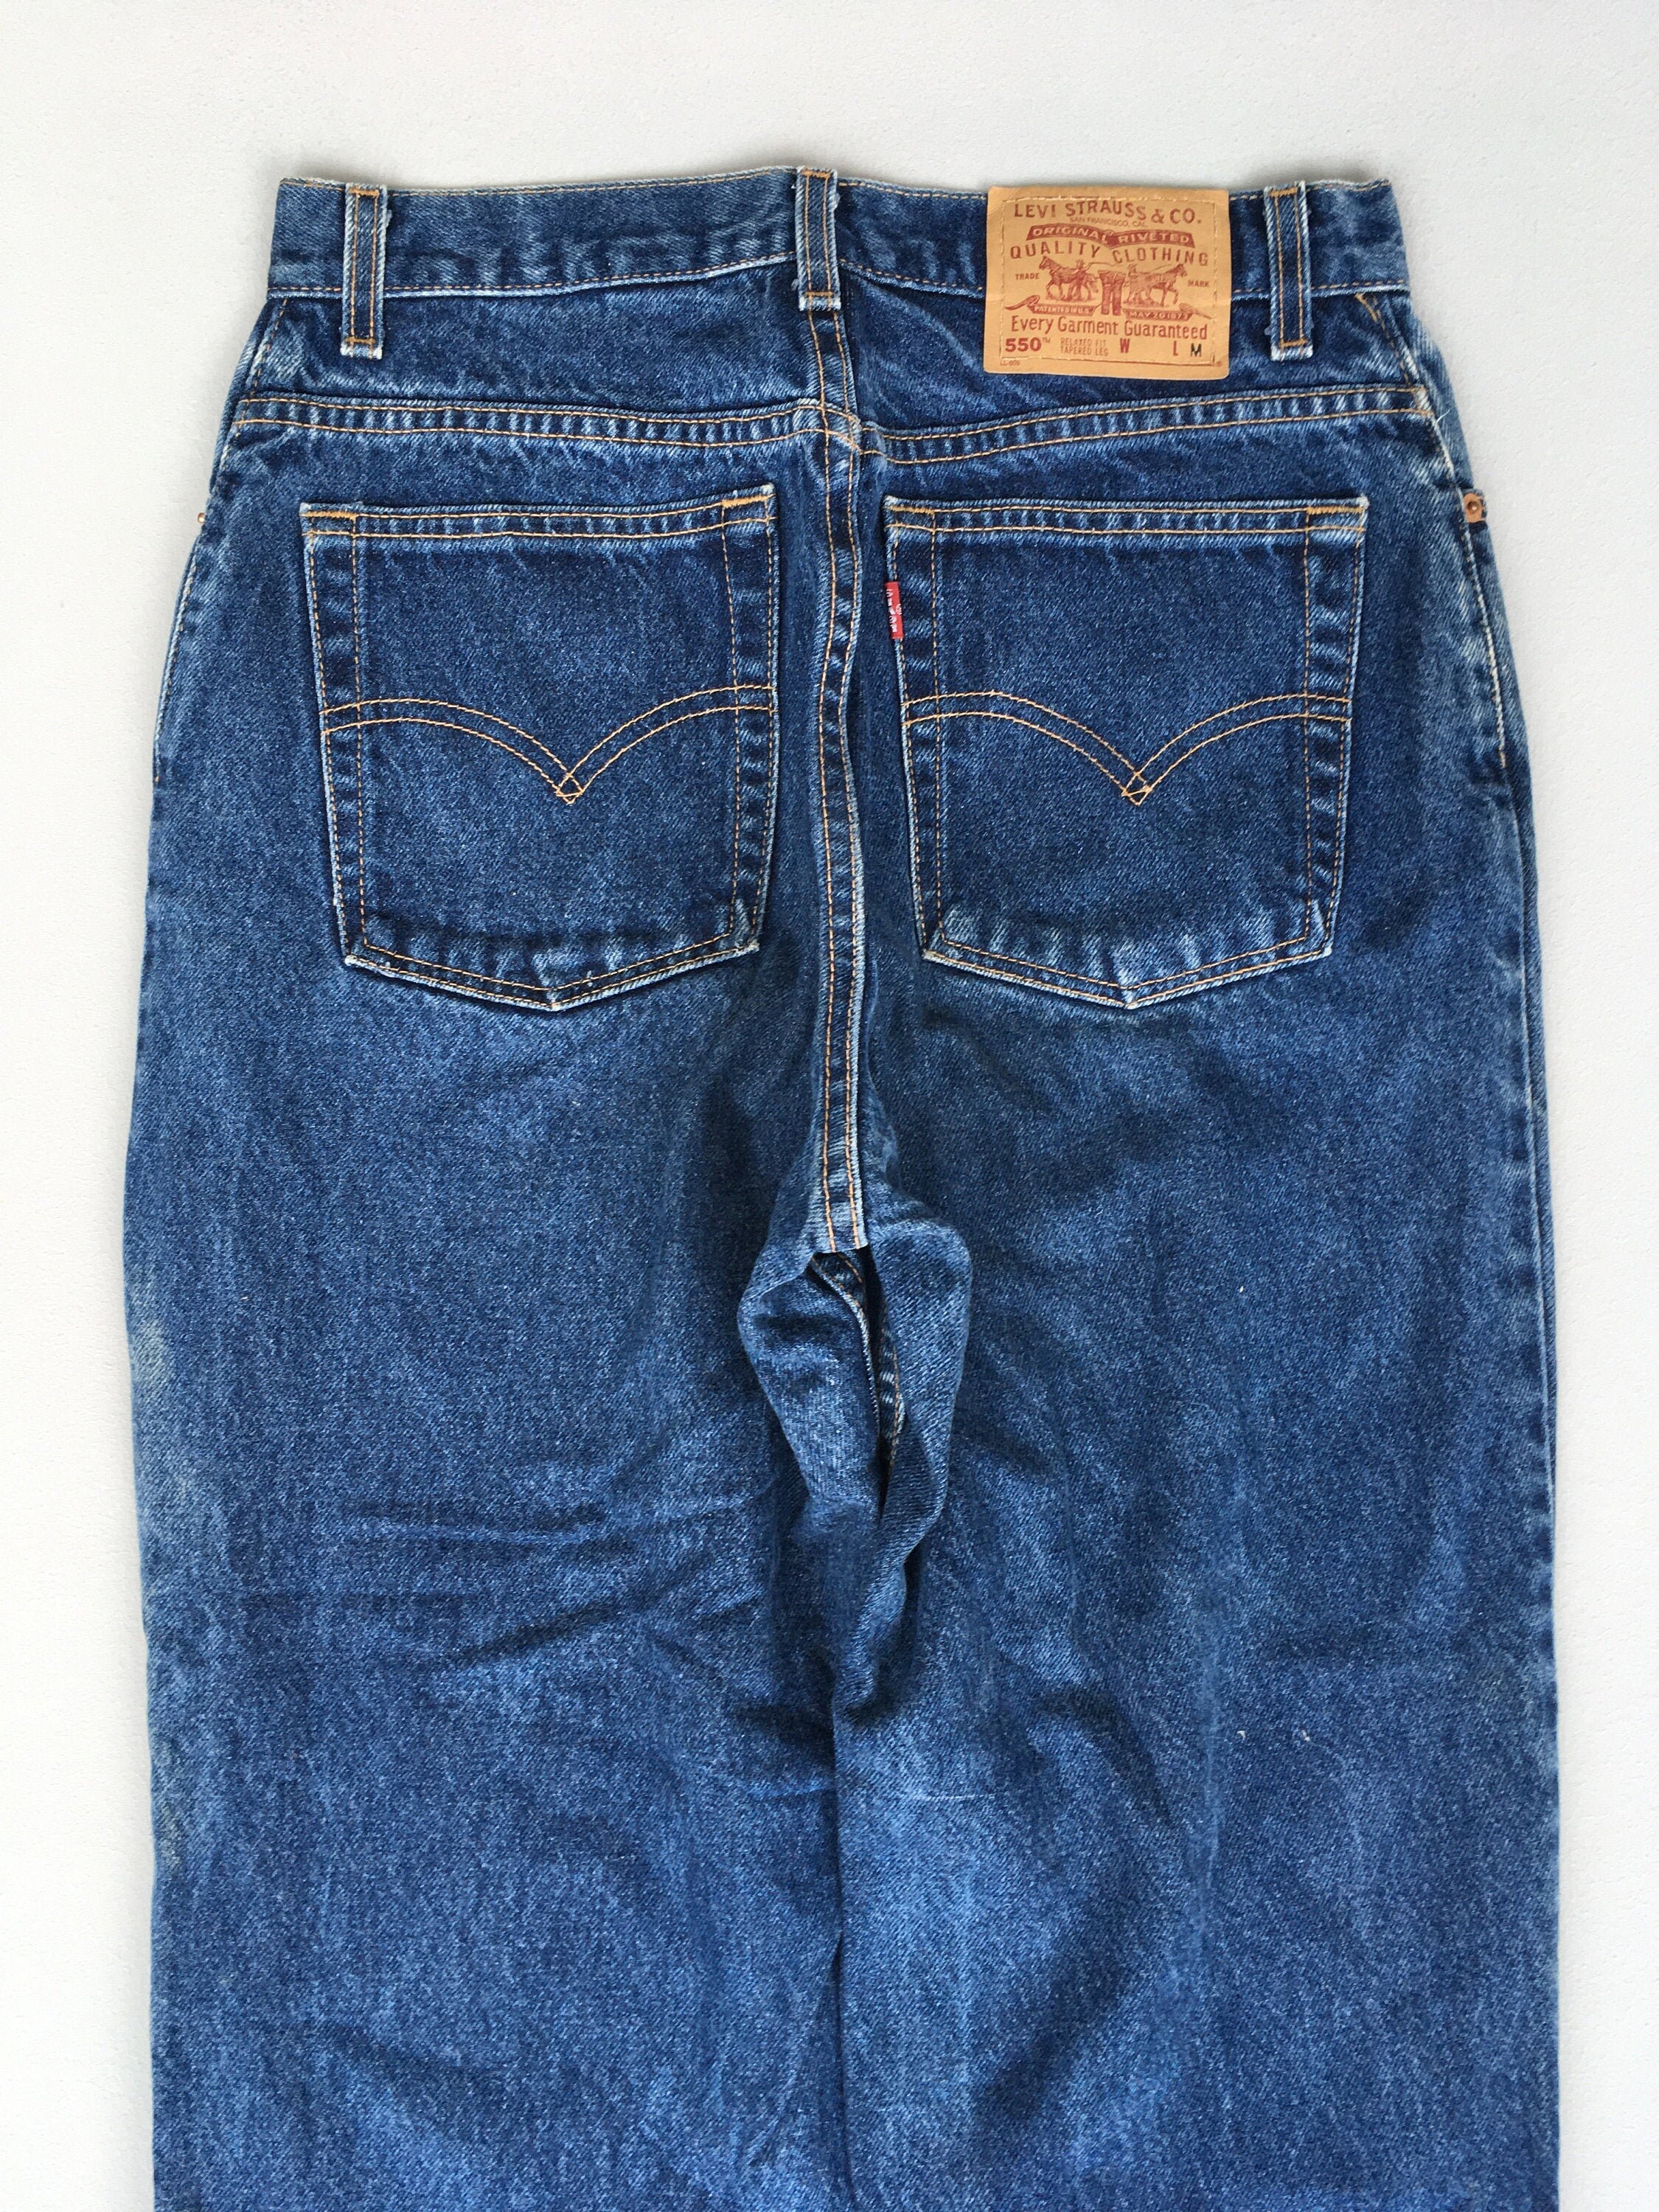 Levis 550 Jeans - Etsy